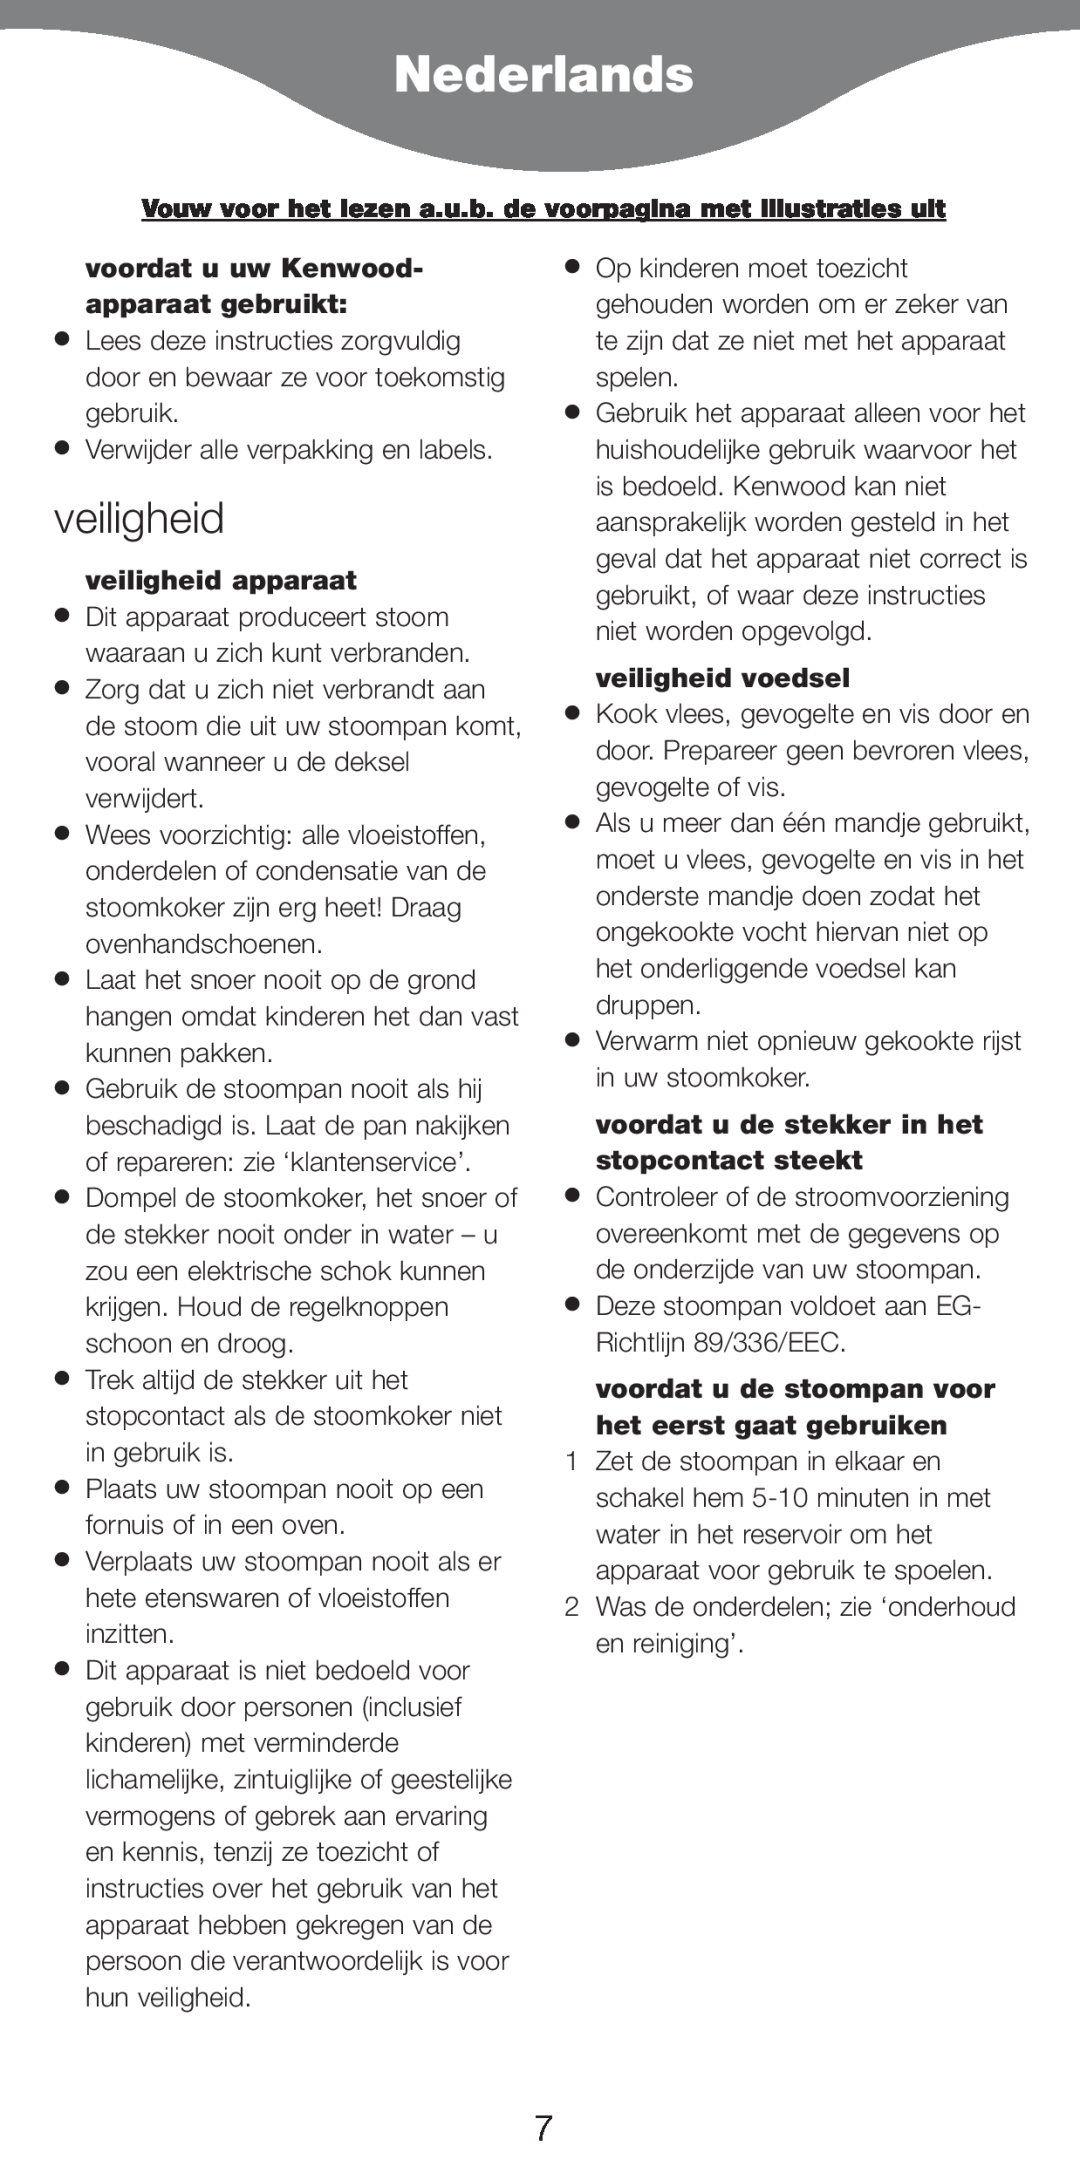 Kenwood FS620 manual Nederlands, voordat u uw Kenwood- apparaat gebruikt, veiligheid apparaat, veiligheid voedsel 